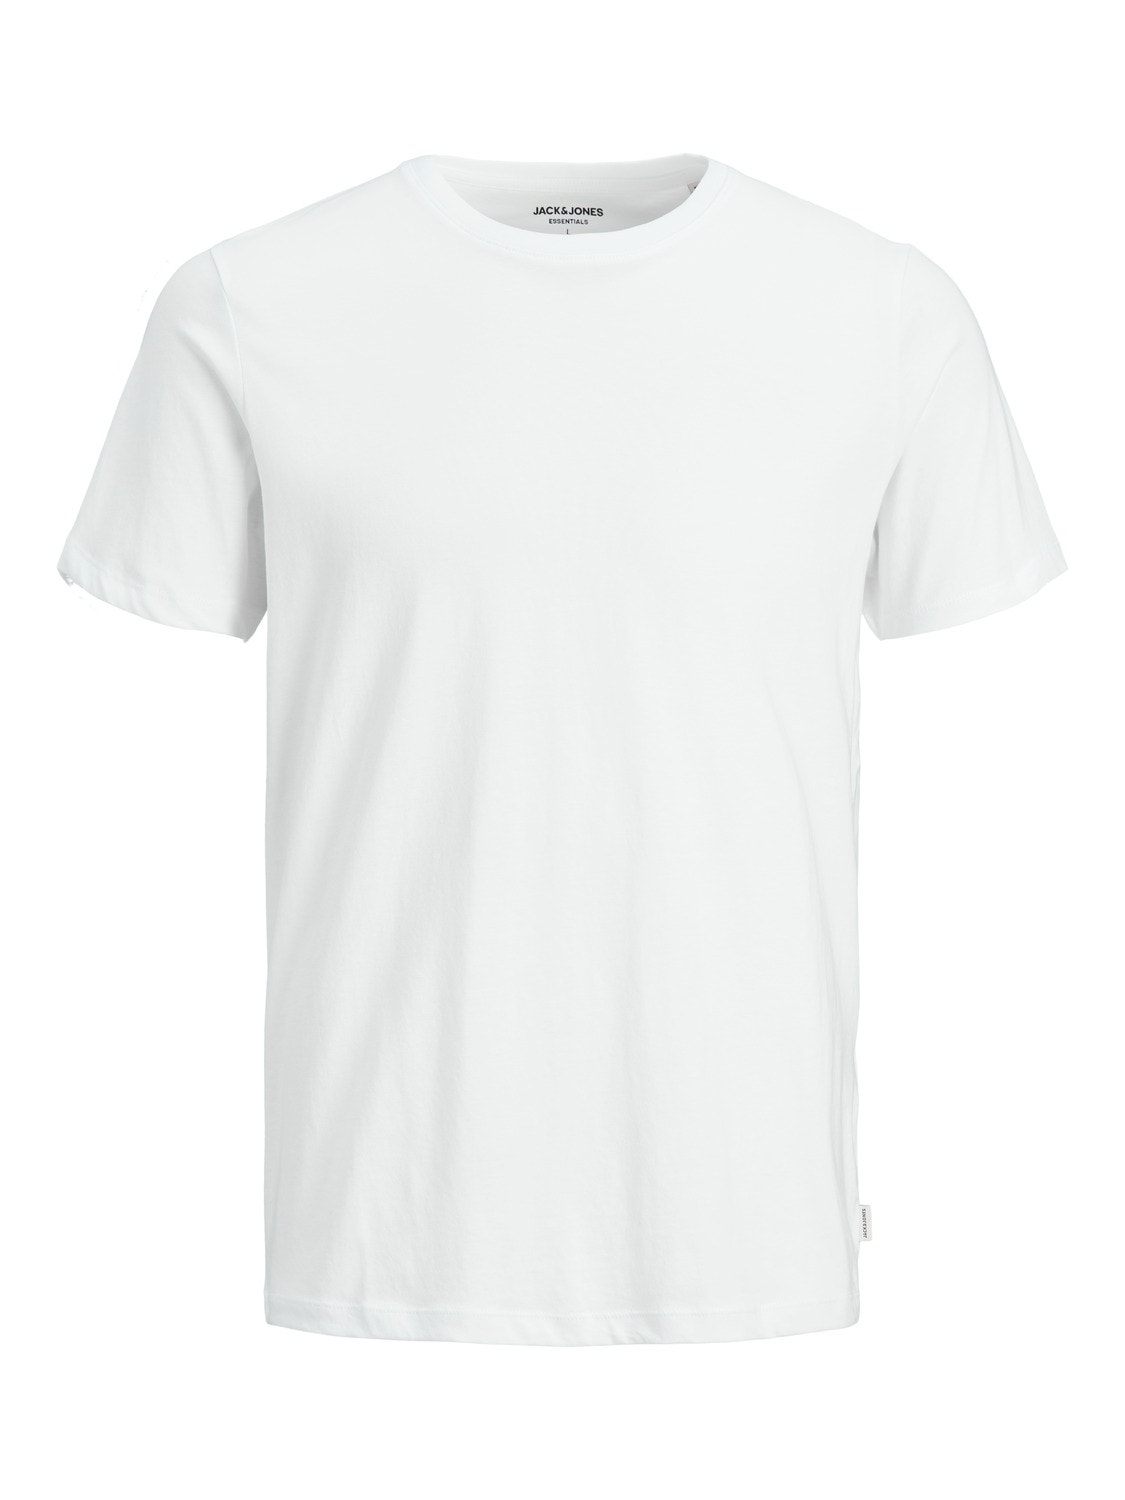 plain white t shirt model